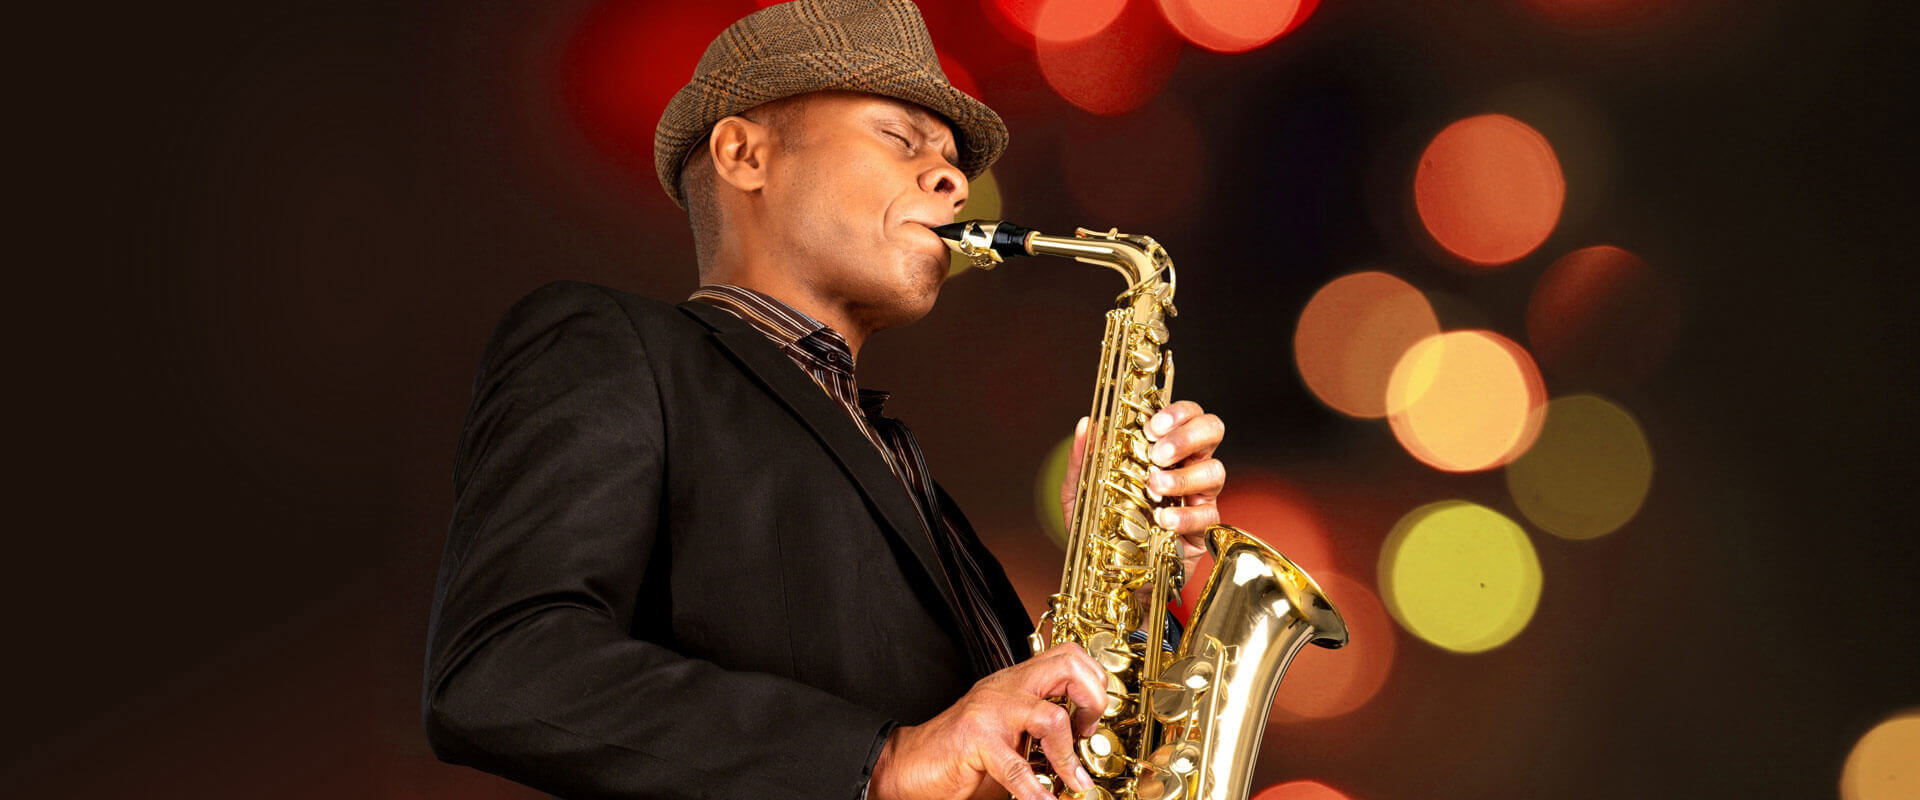 Saxophone Lessons Avella, PA